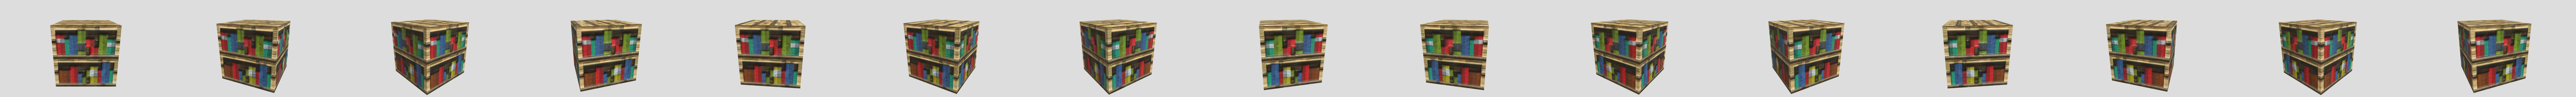 Minecraft Bookshelf Download Free 3d Model By Hralsei Hralsei Ae8b80e